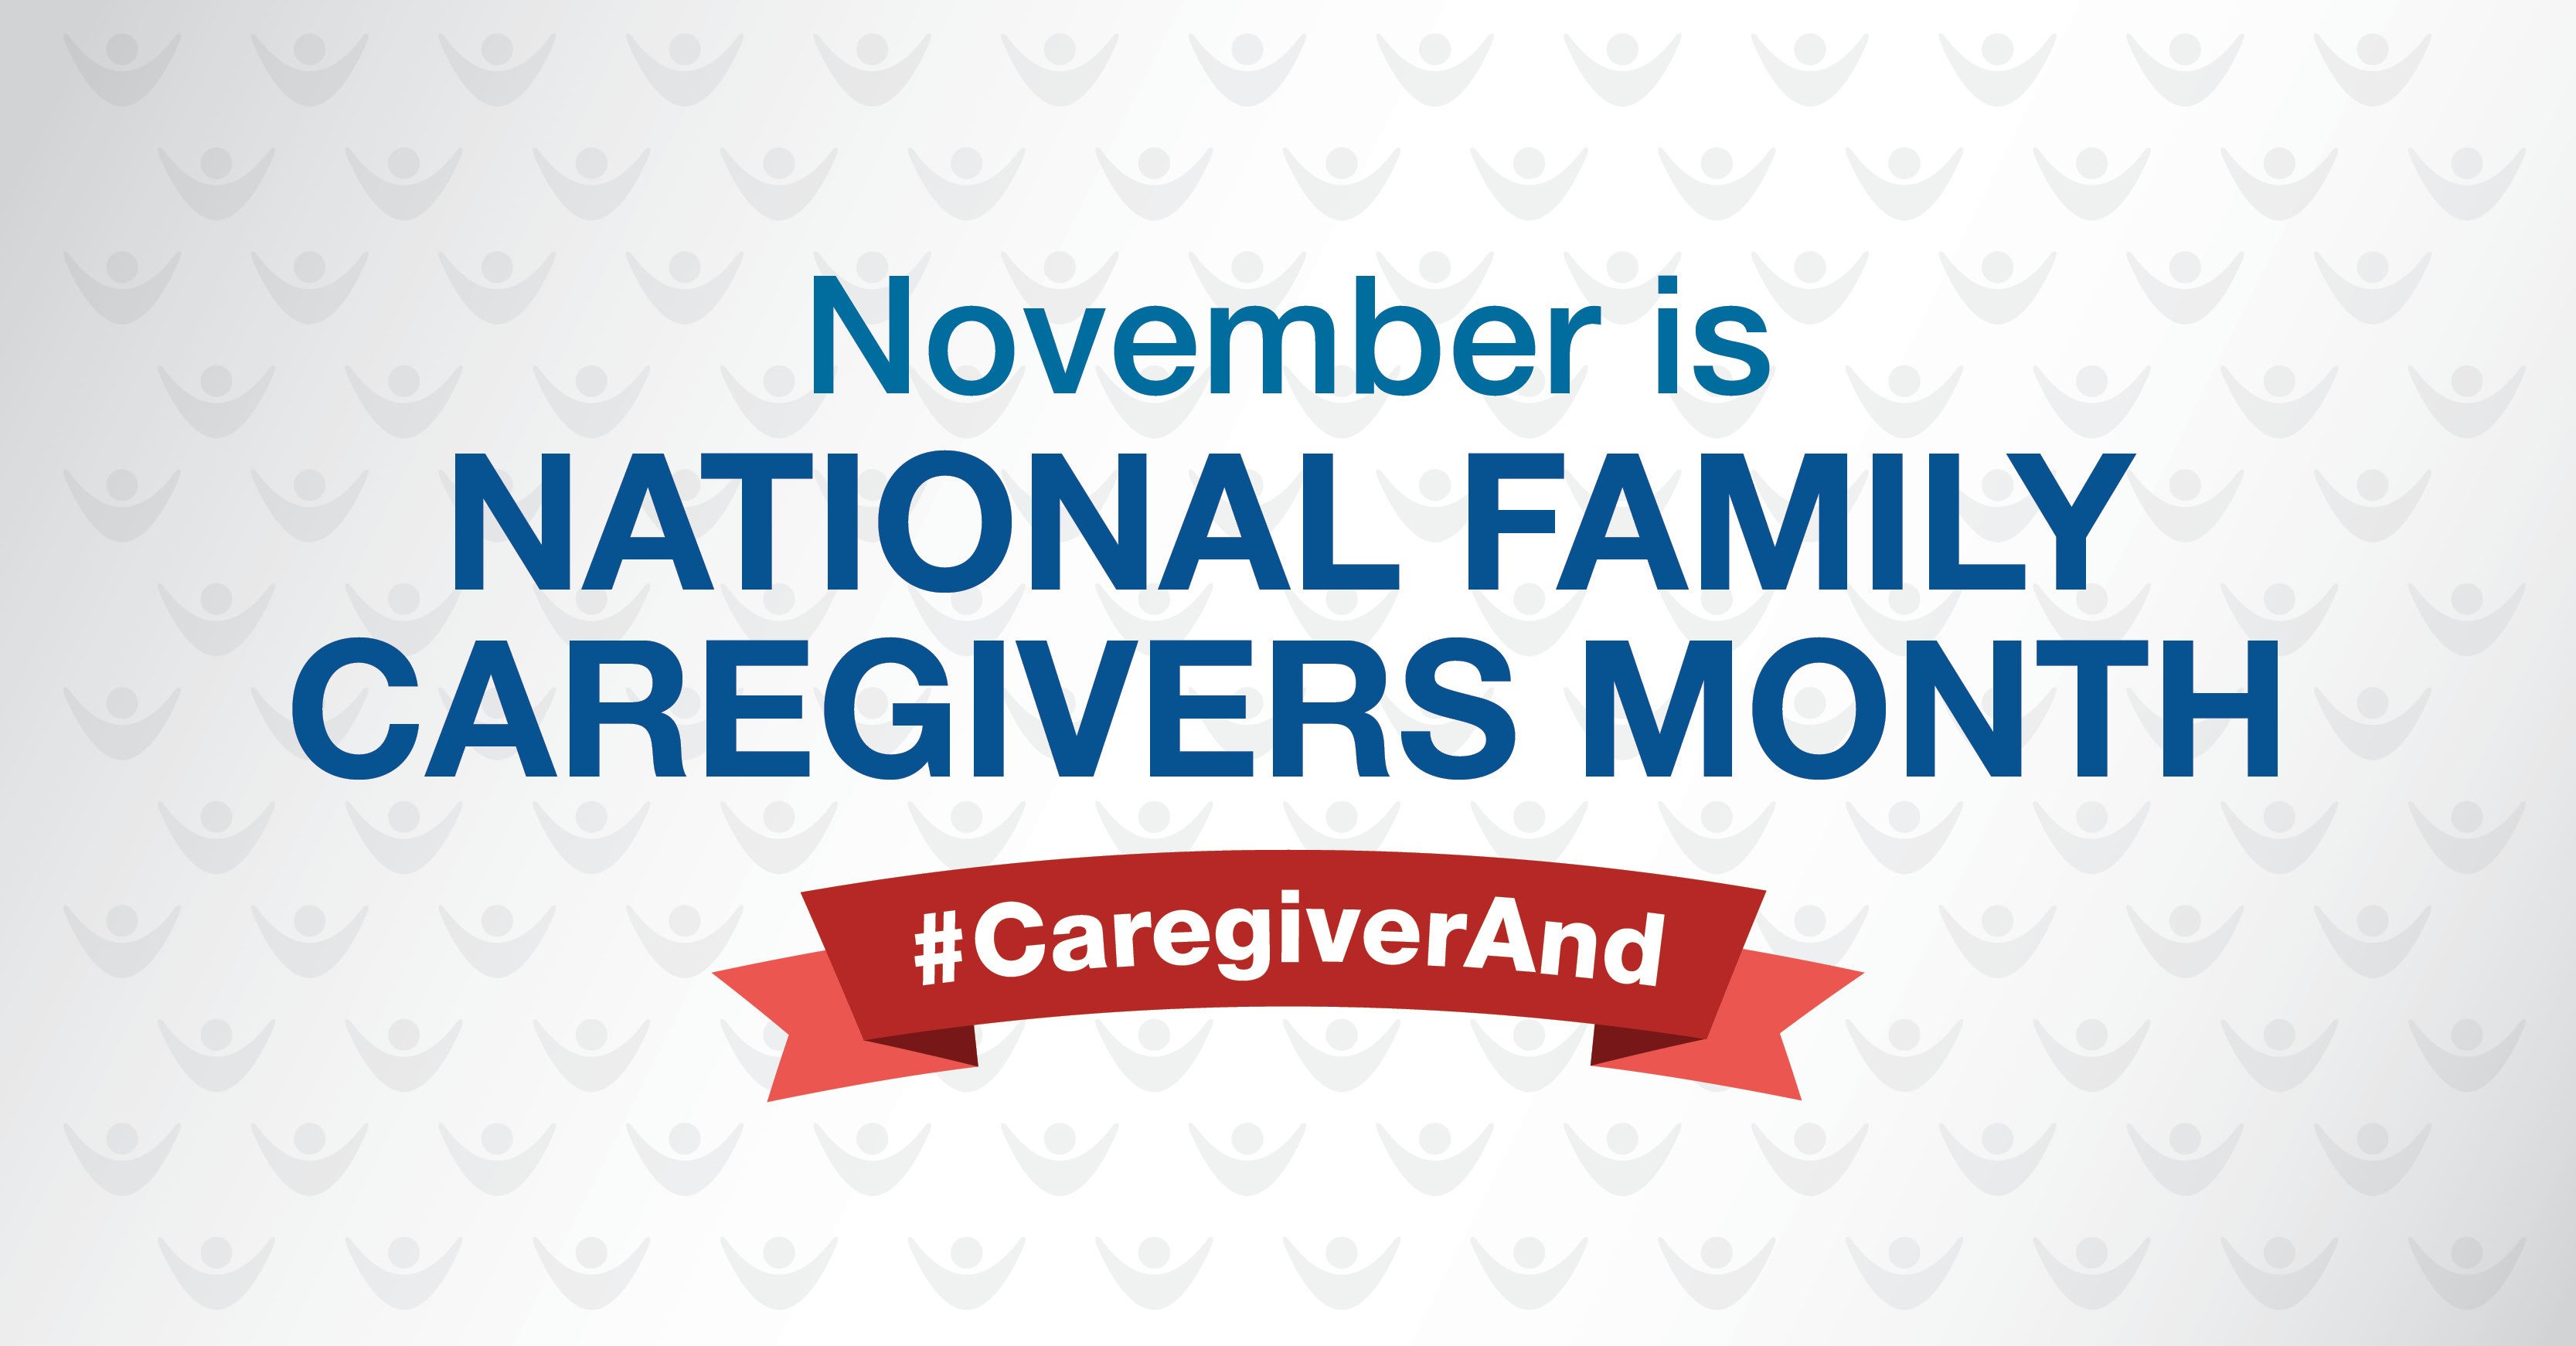 National Family Caregiver Month is November